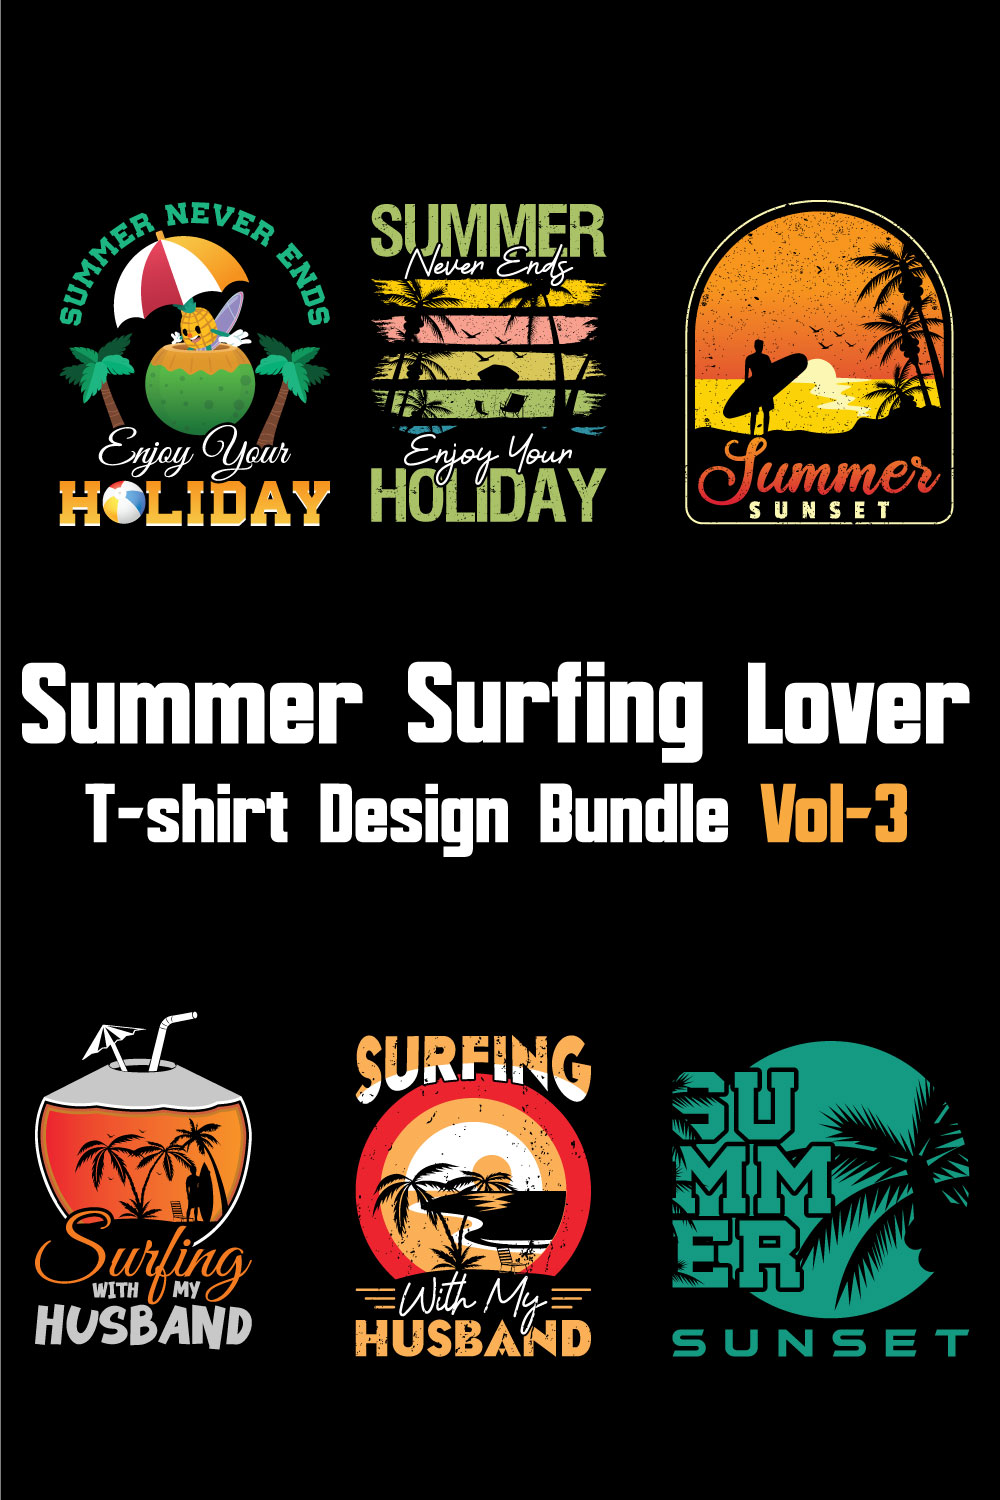 Summer Surfing Lover T-shirt Design Bundle Vol-3 pinterest preview image.